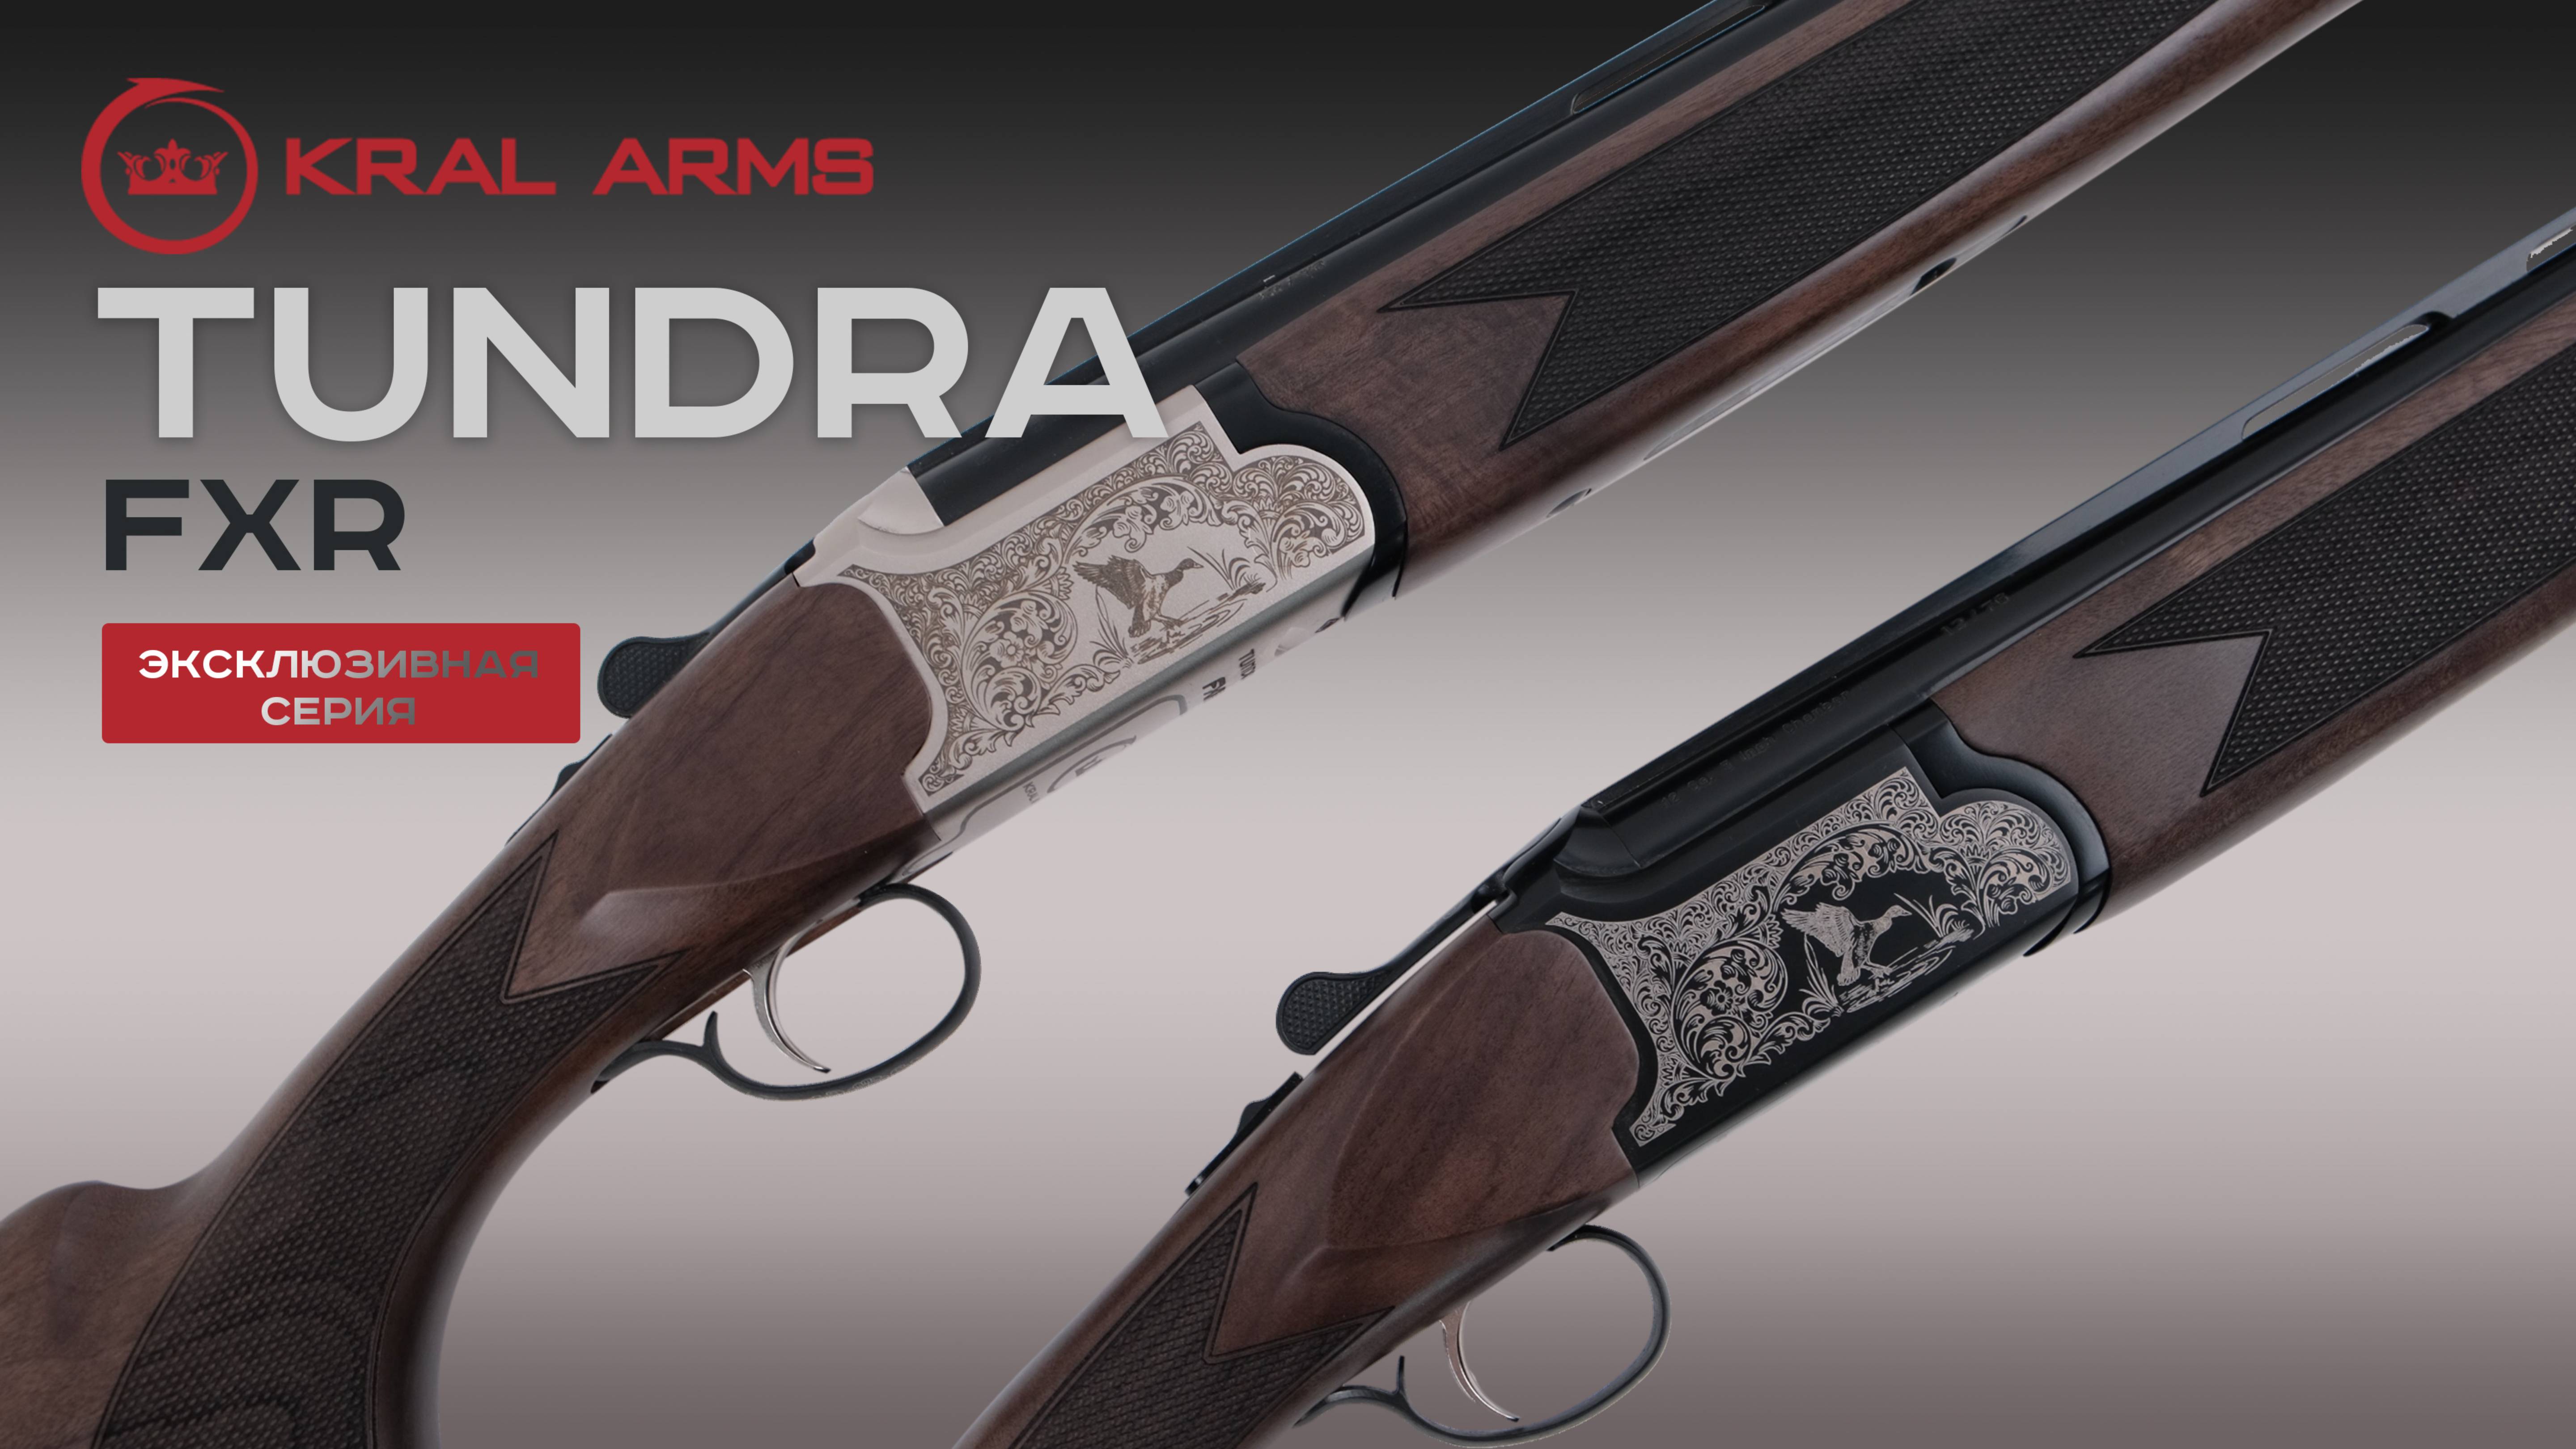 KRAL ARMS Tundra FXR | эксклюзивная серия двуствольных ружей